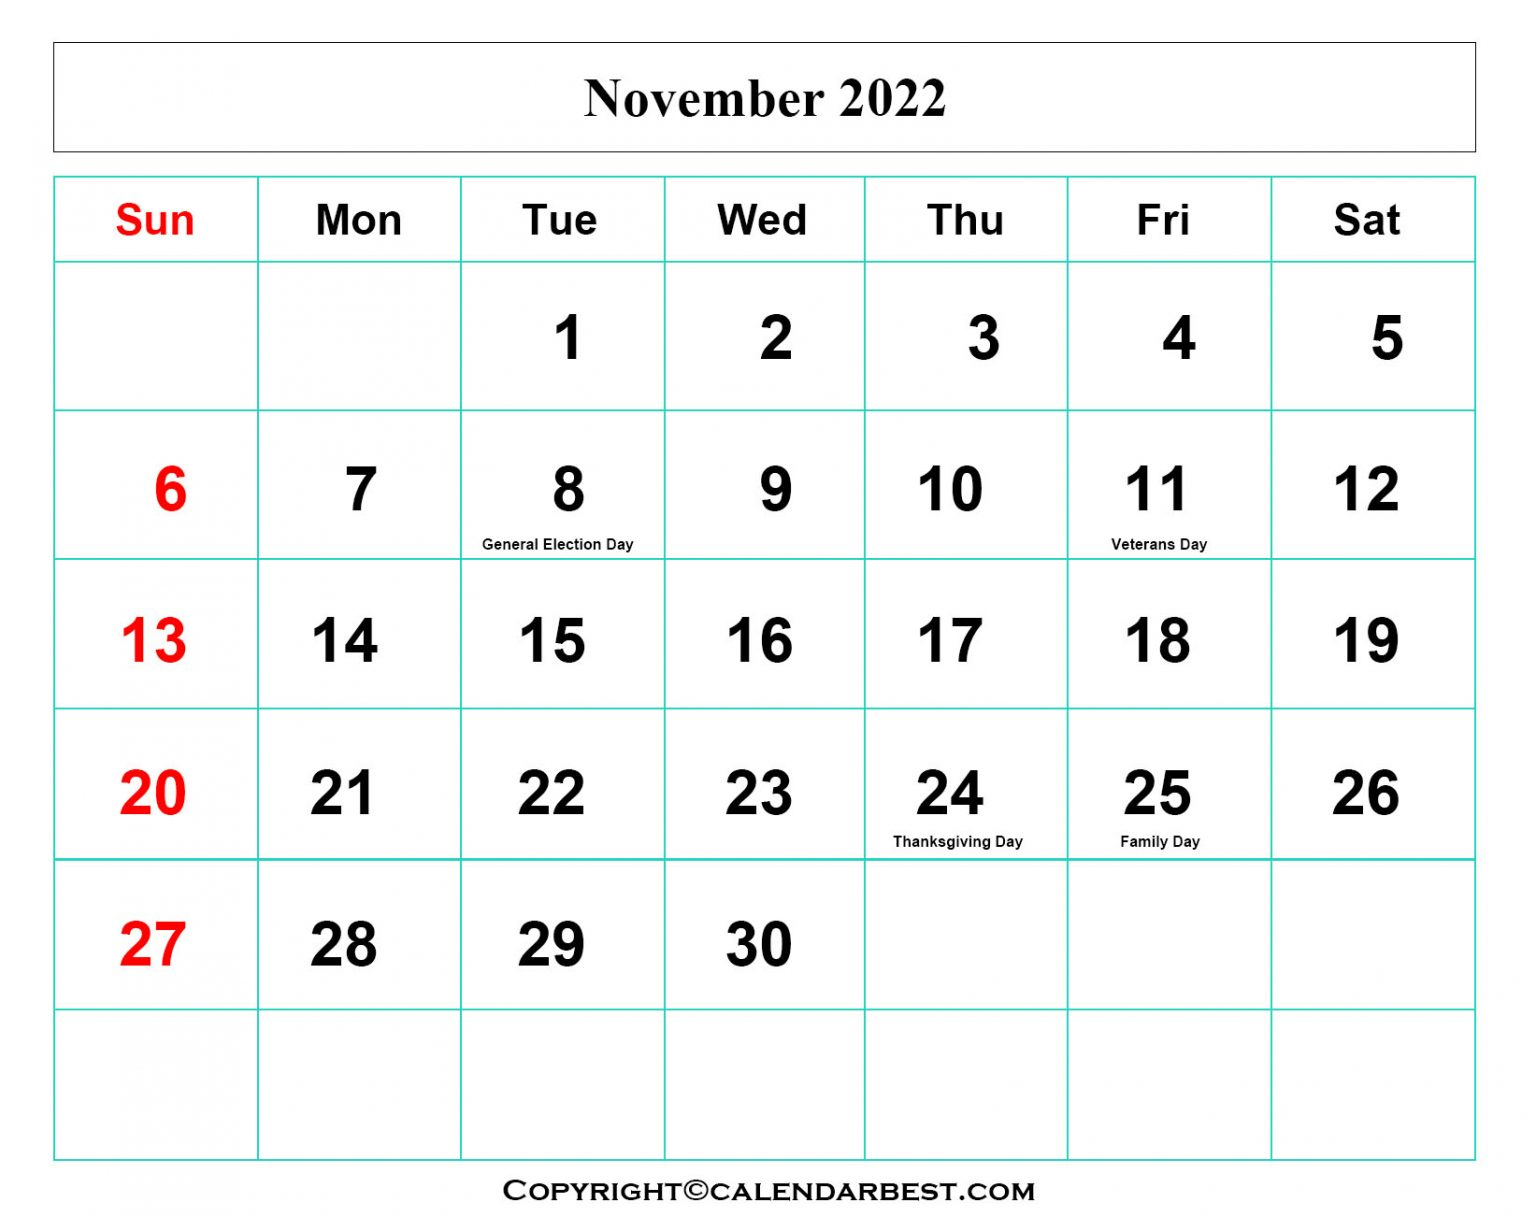 Free Printable November Calendar 2022 With Holidays